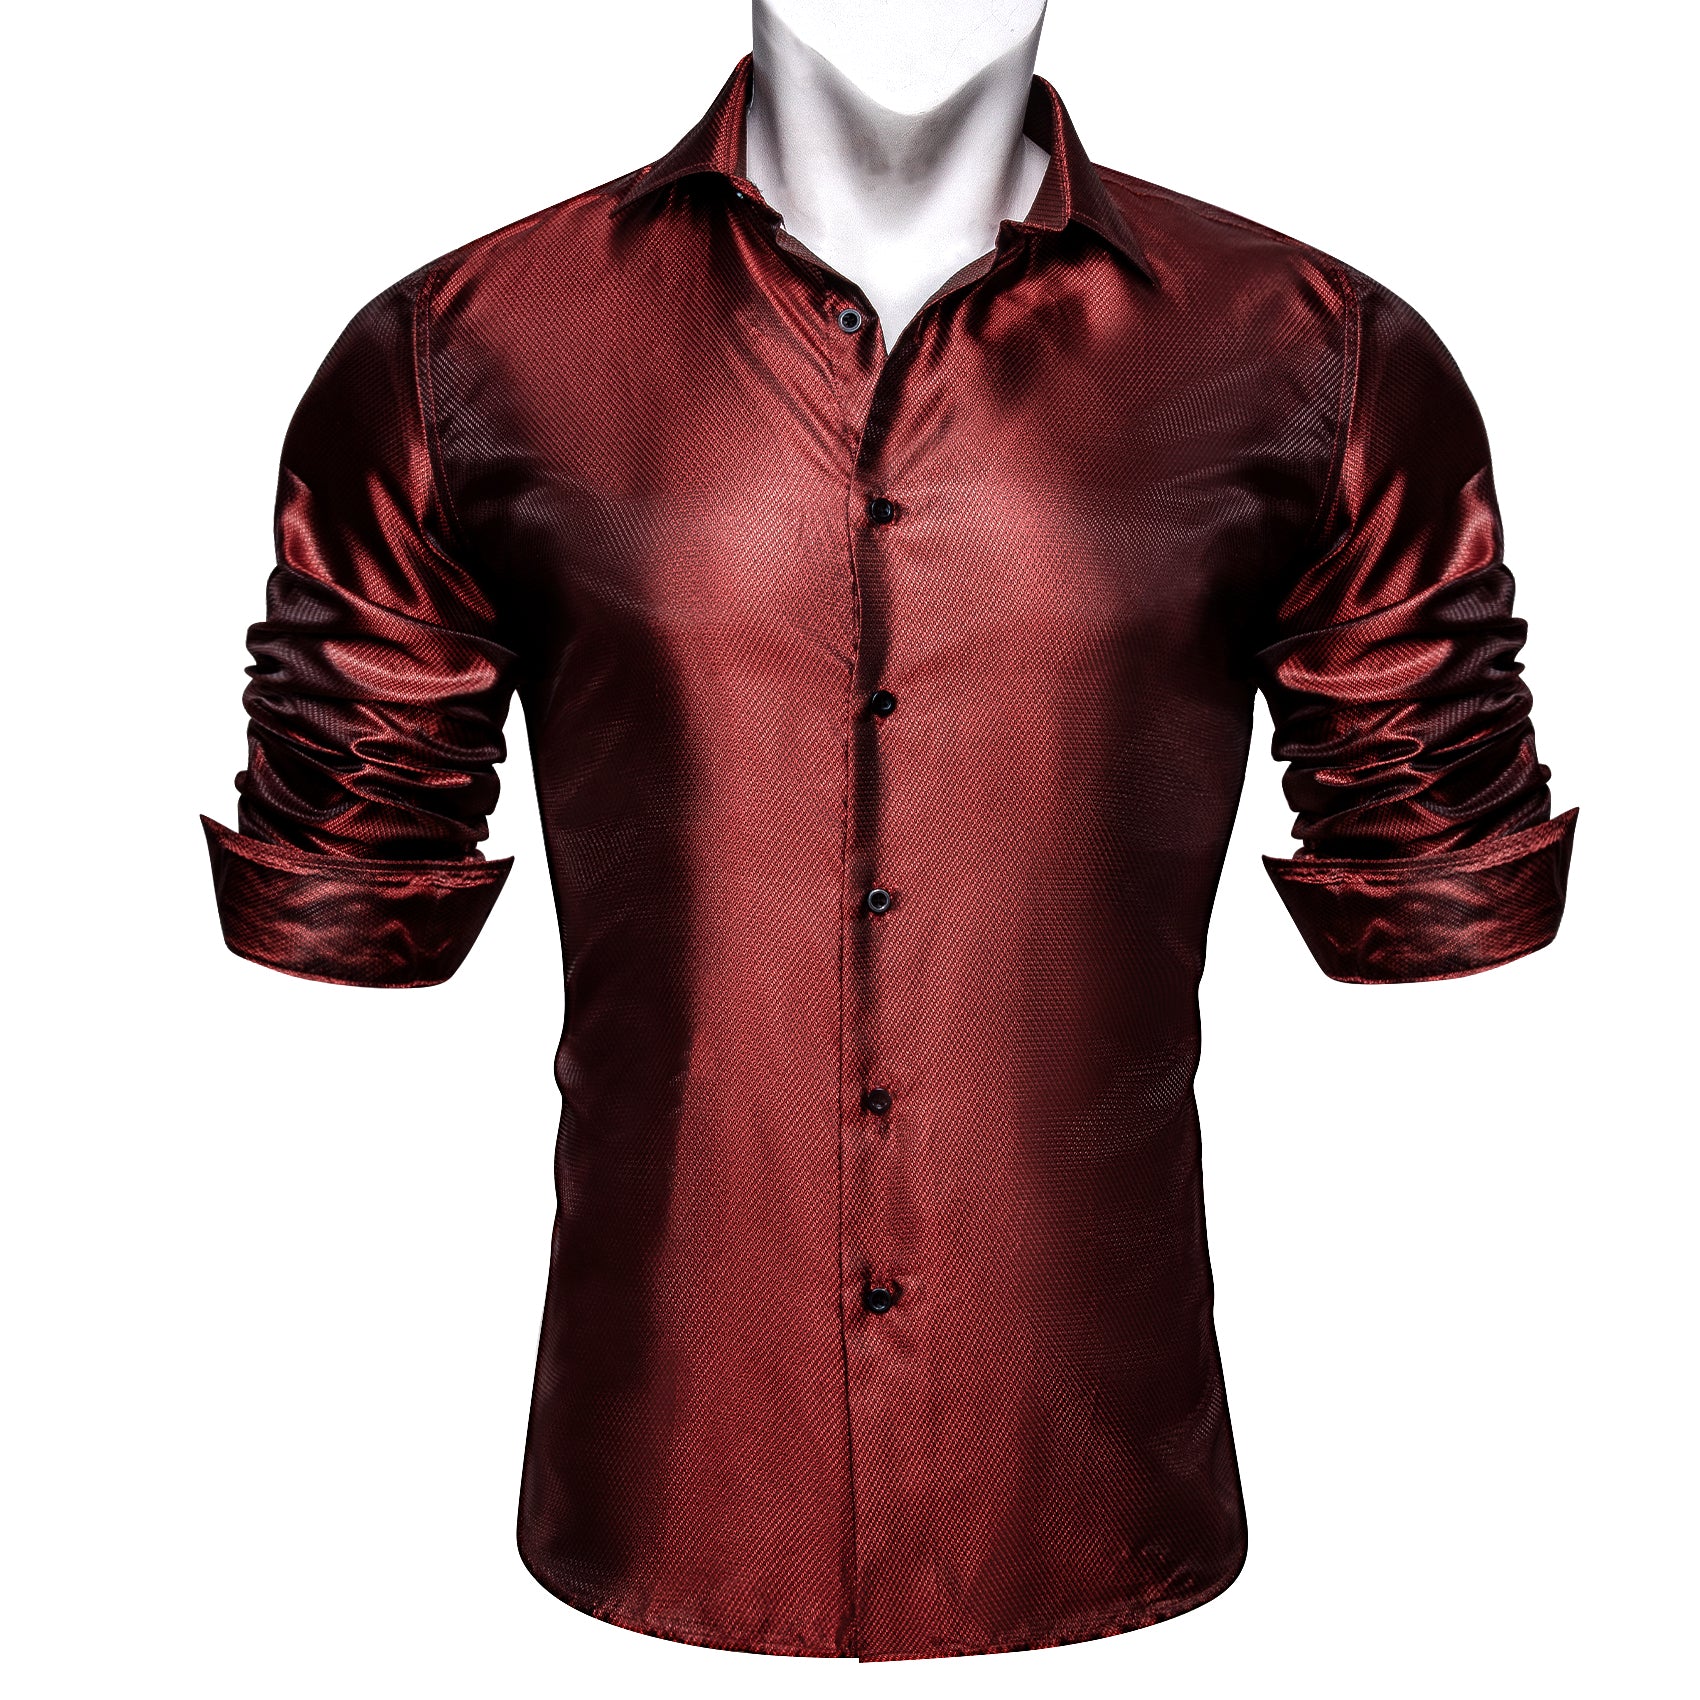 Barry.wang New Rust Red Solid Silk Shirt